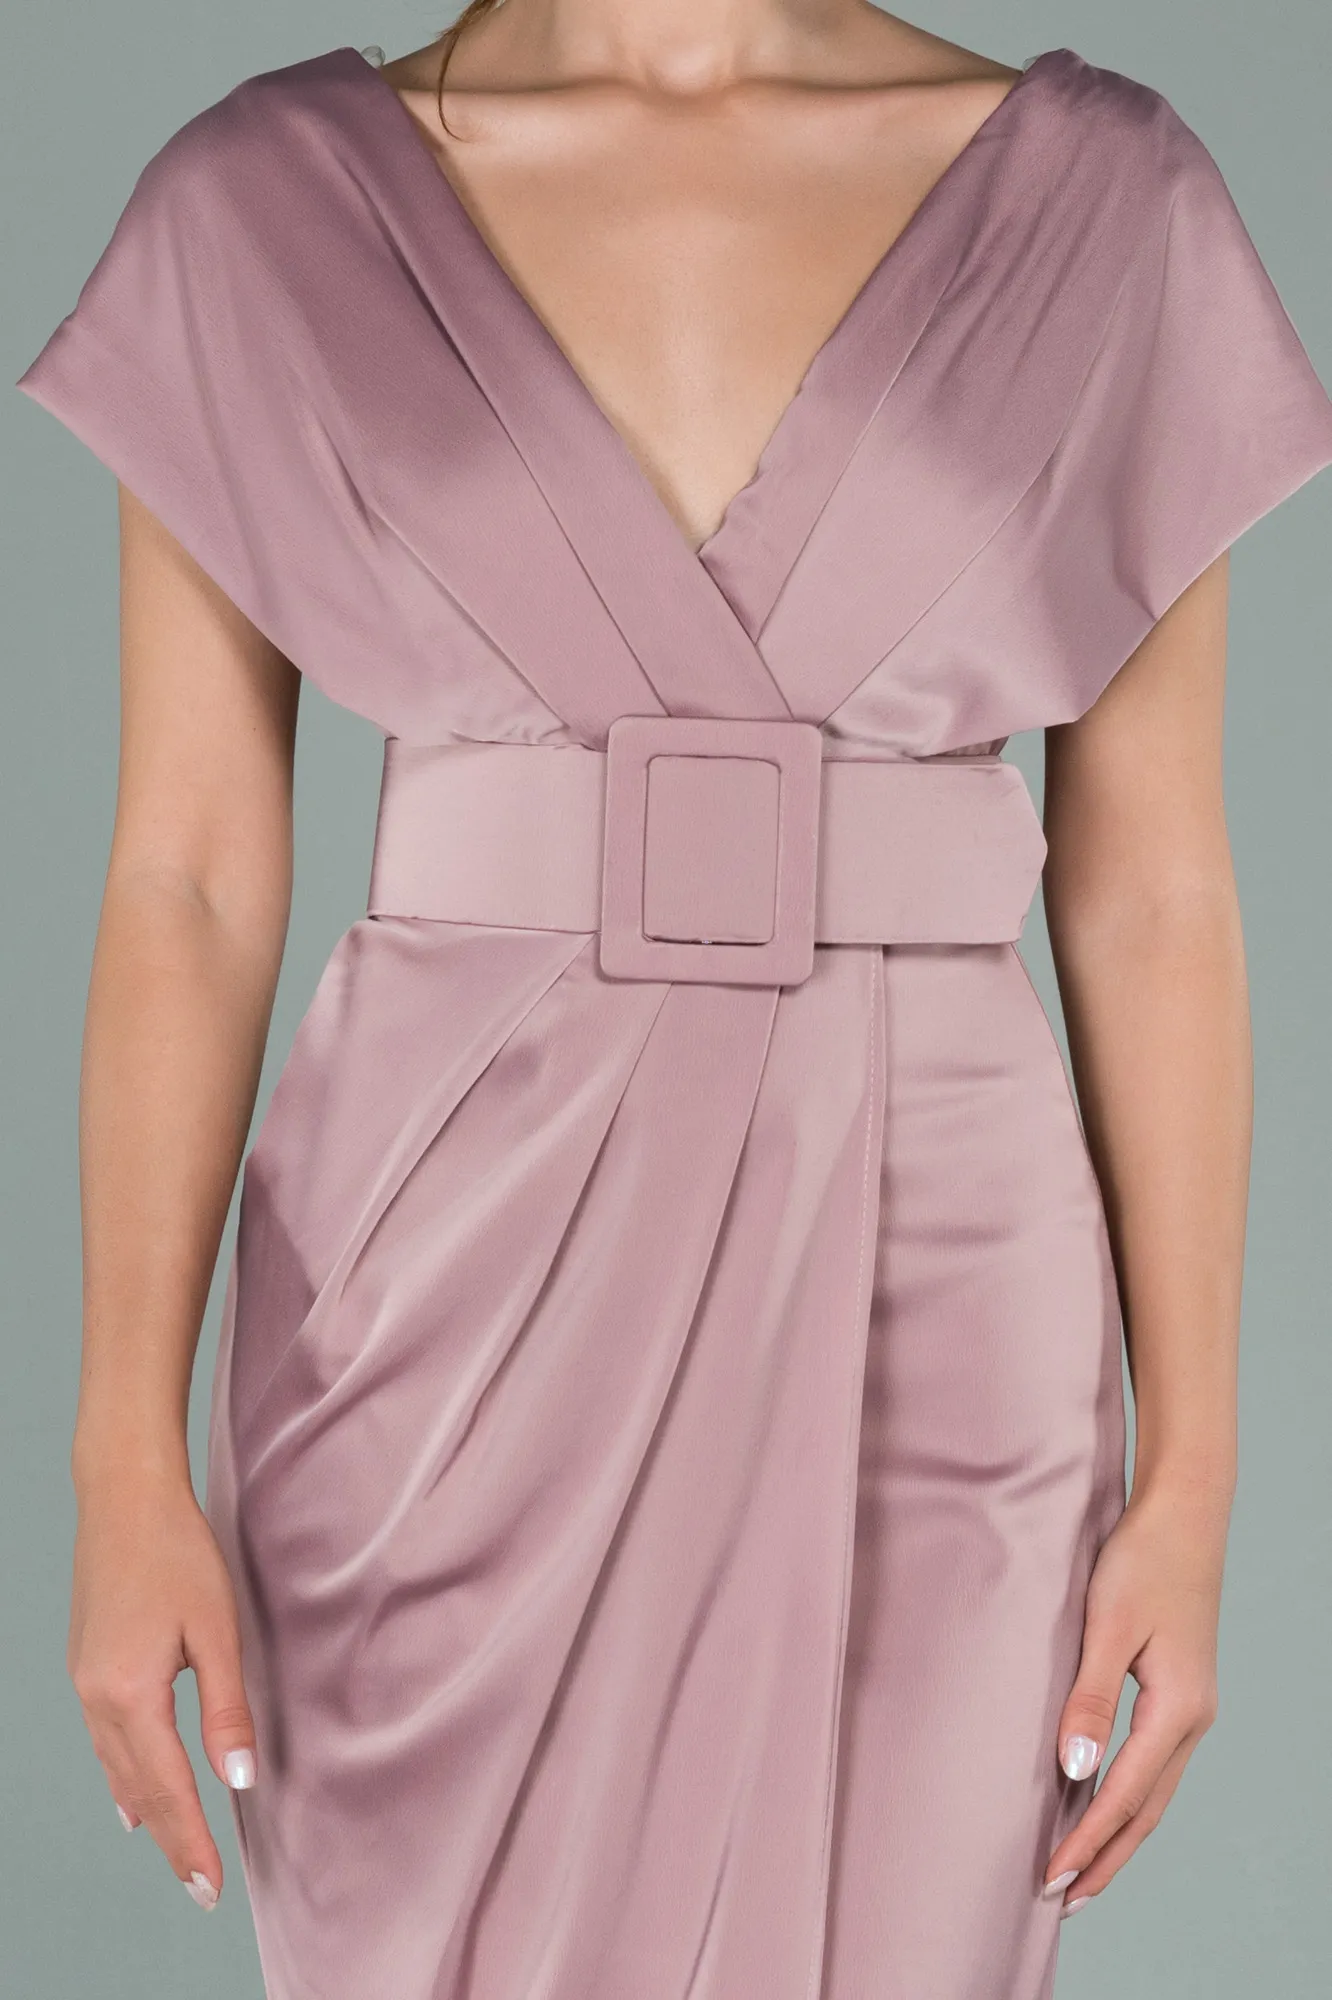 Rose Colored-Short Satin Invitation Dress ABK1107